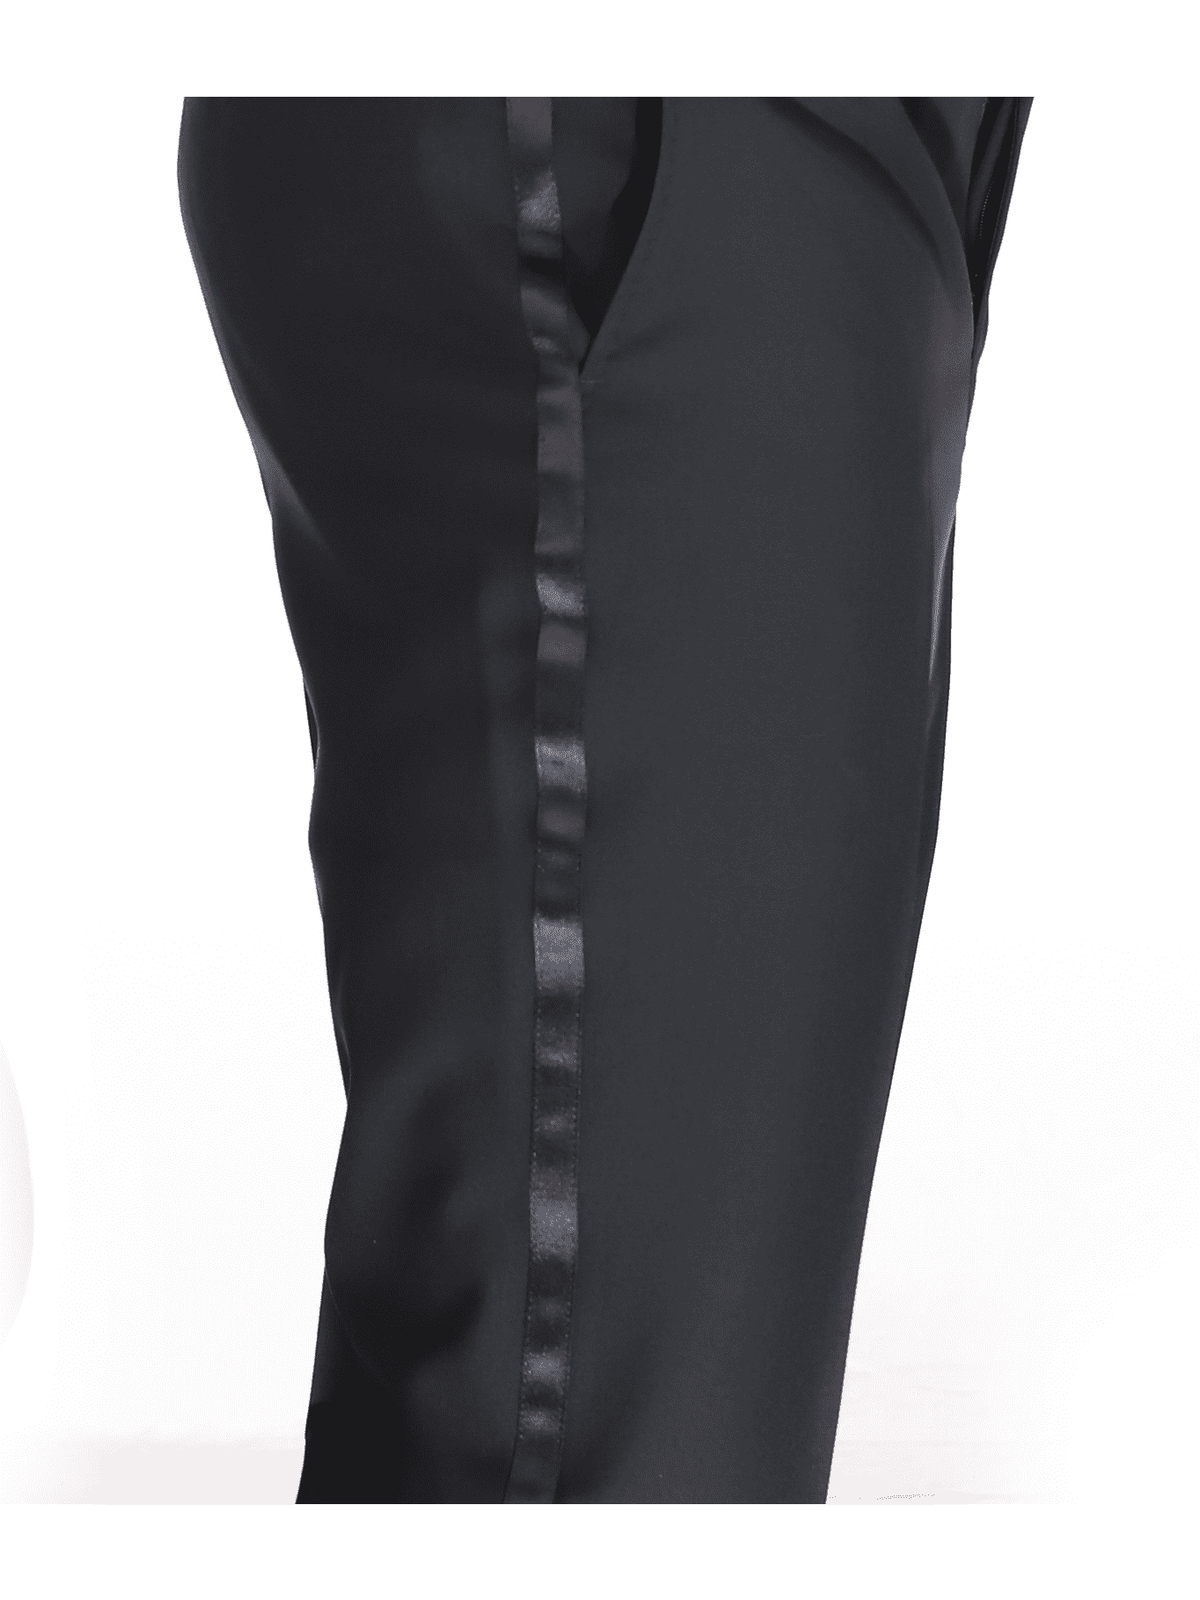 Blujacket TUXEDOS Blujacket Mens Solid Black 100% Wool Regular Fit Tuxedo Suit With Peak Lapels